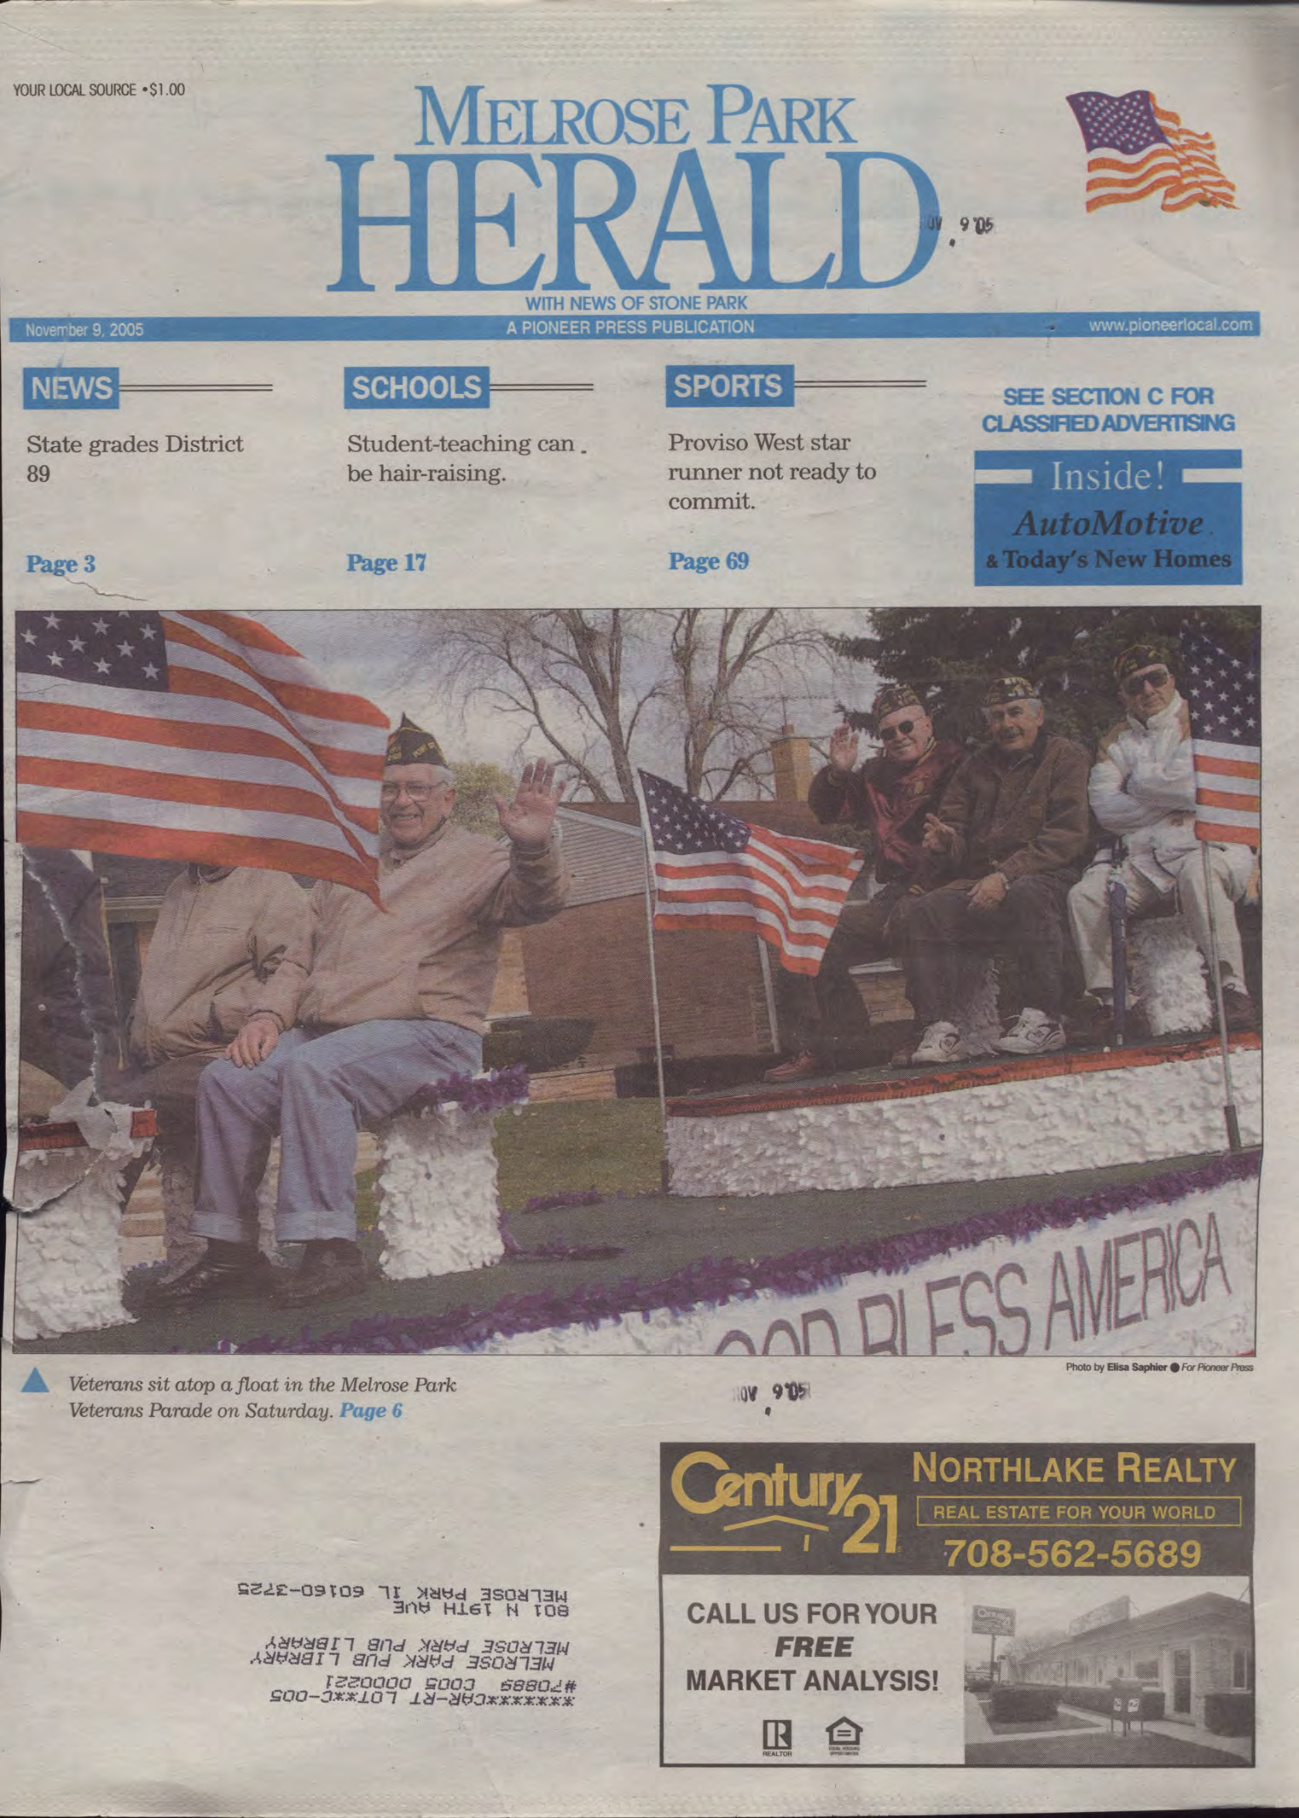 The Herald – 20051109